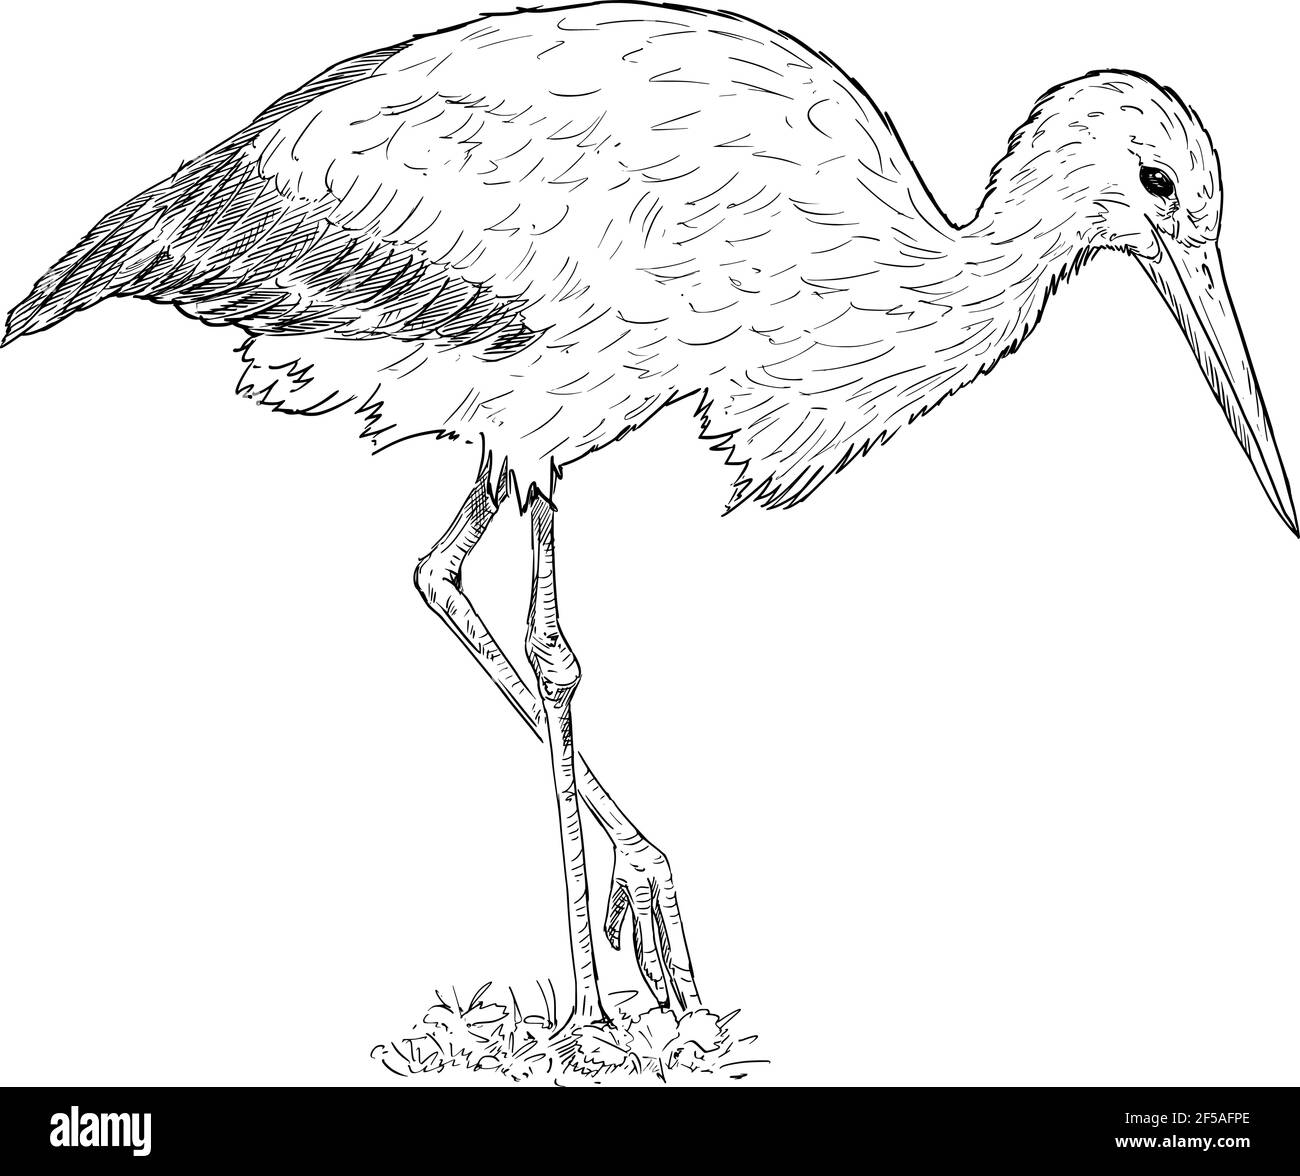 White Stork Bird Standing. Vector Drawing or Illustration Stock Vector